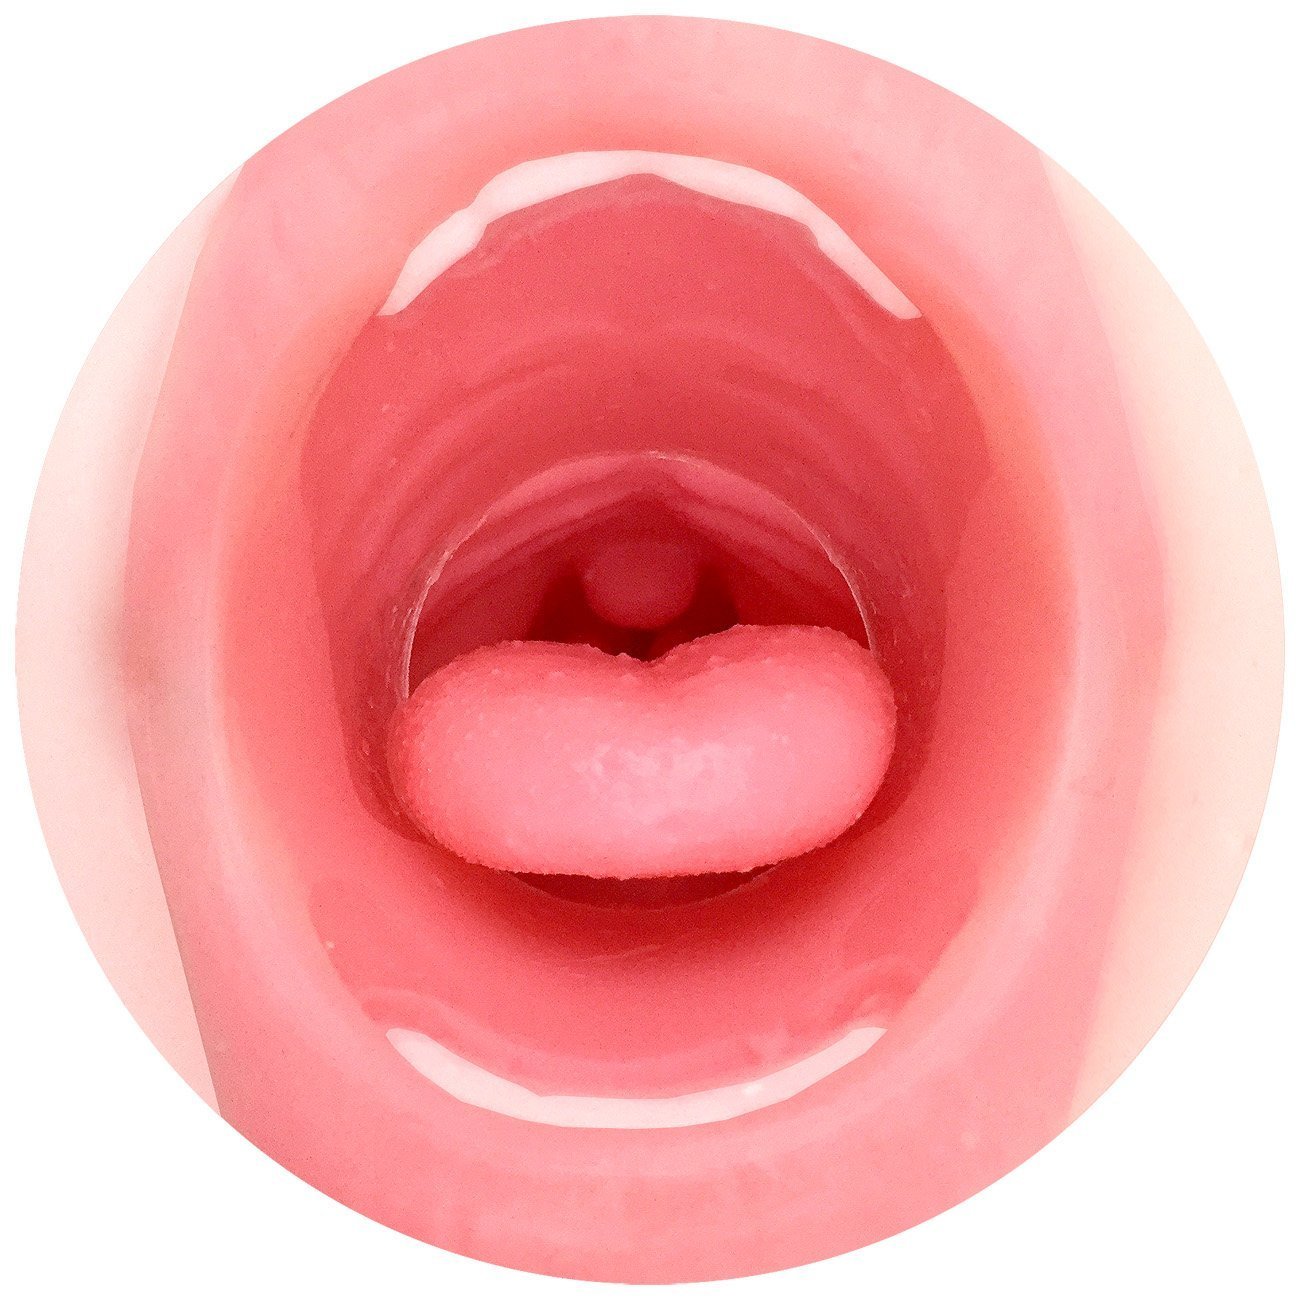 ONDO! - NUPU Mouth Masturbator (Beige) -  Masturbator Mouth (Non Vibration)  Durio.sg